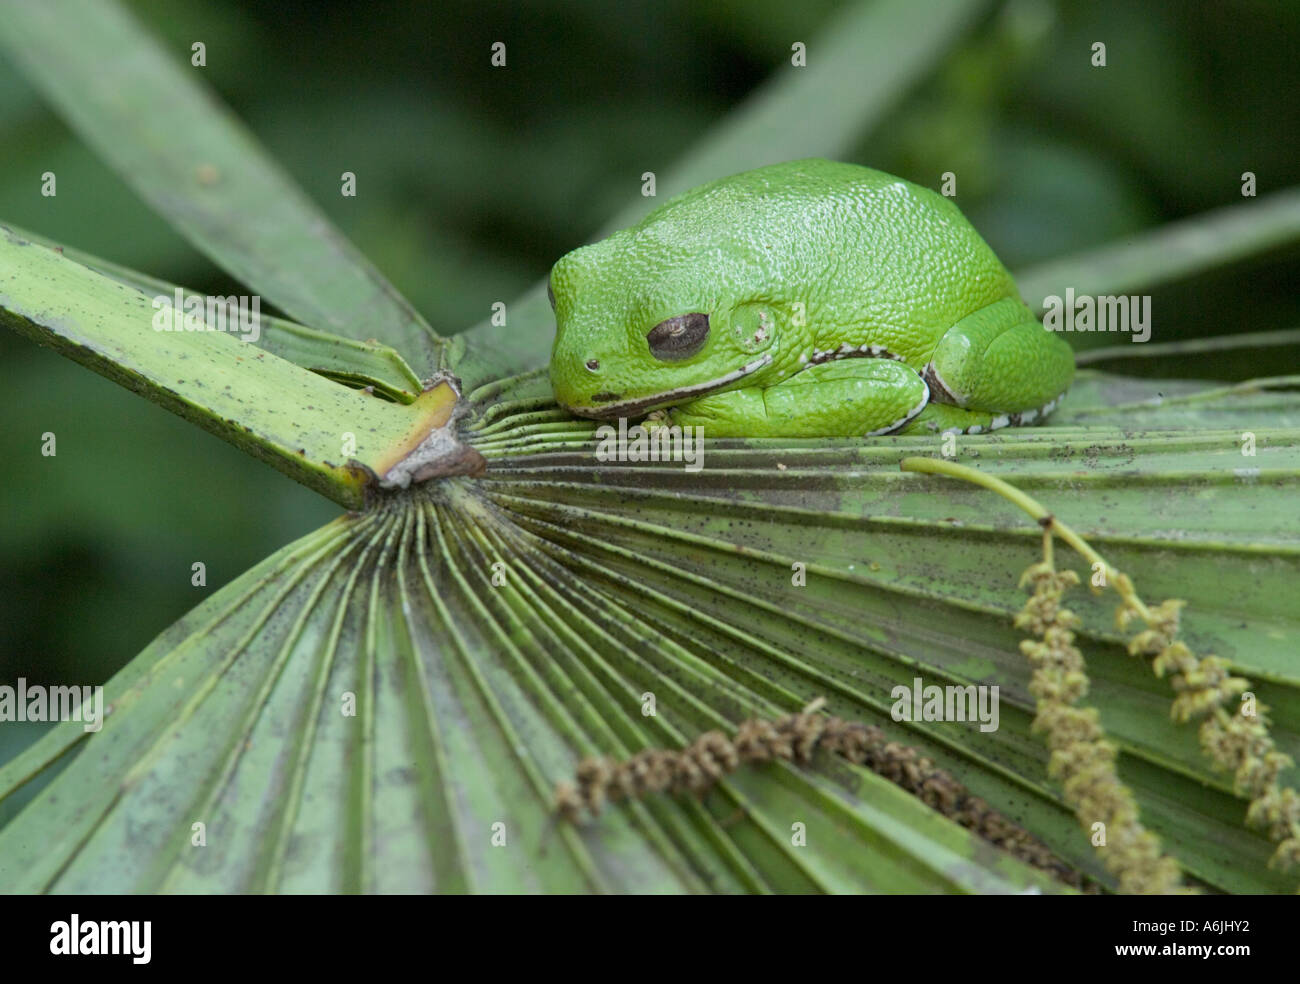 Ranocchio verde dormire su Sable Palmetto frond Foto Stock